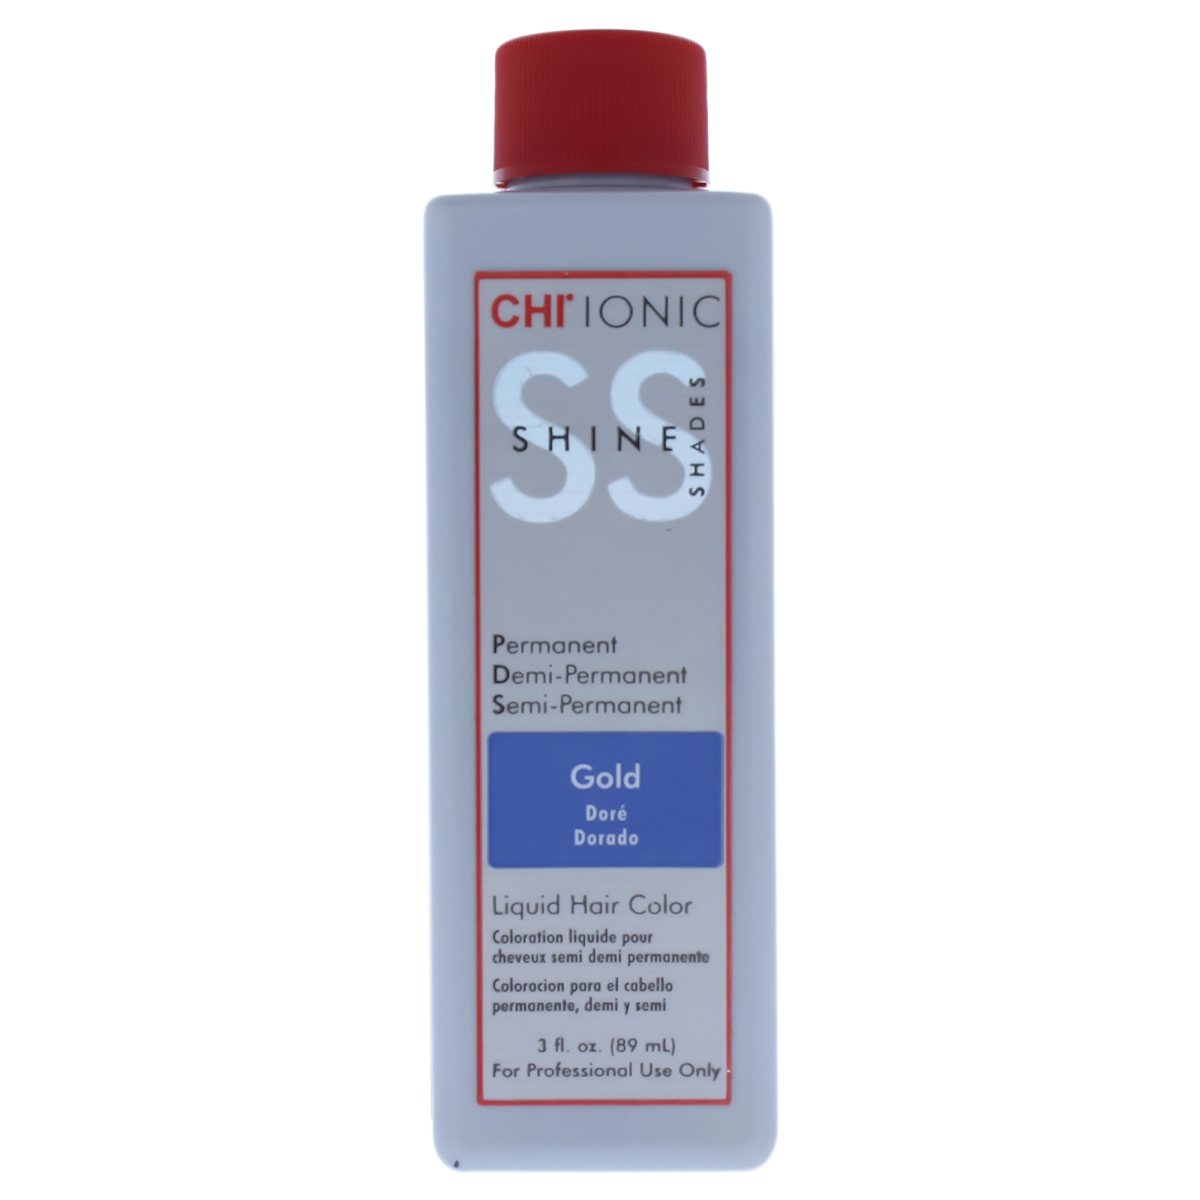 I0084061 Ionic Shine Shades Liquid Hair Color For Unisex - Gold - 3 Oz